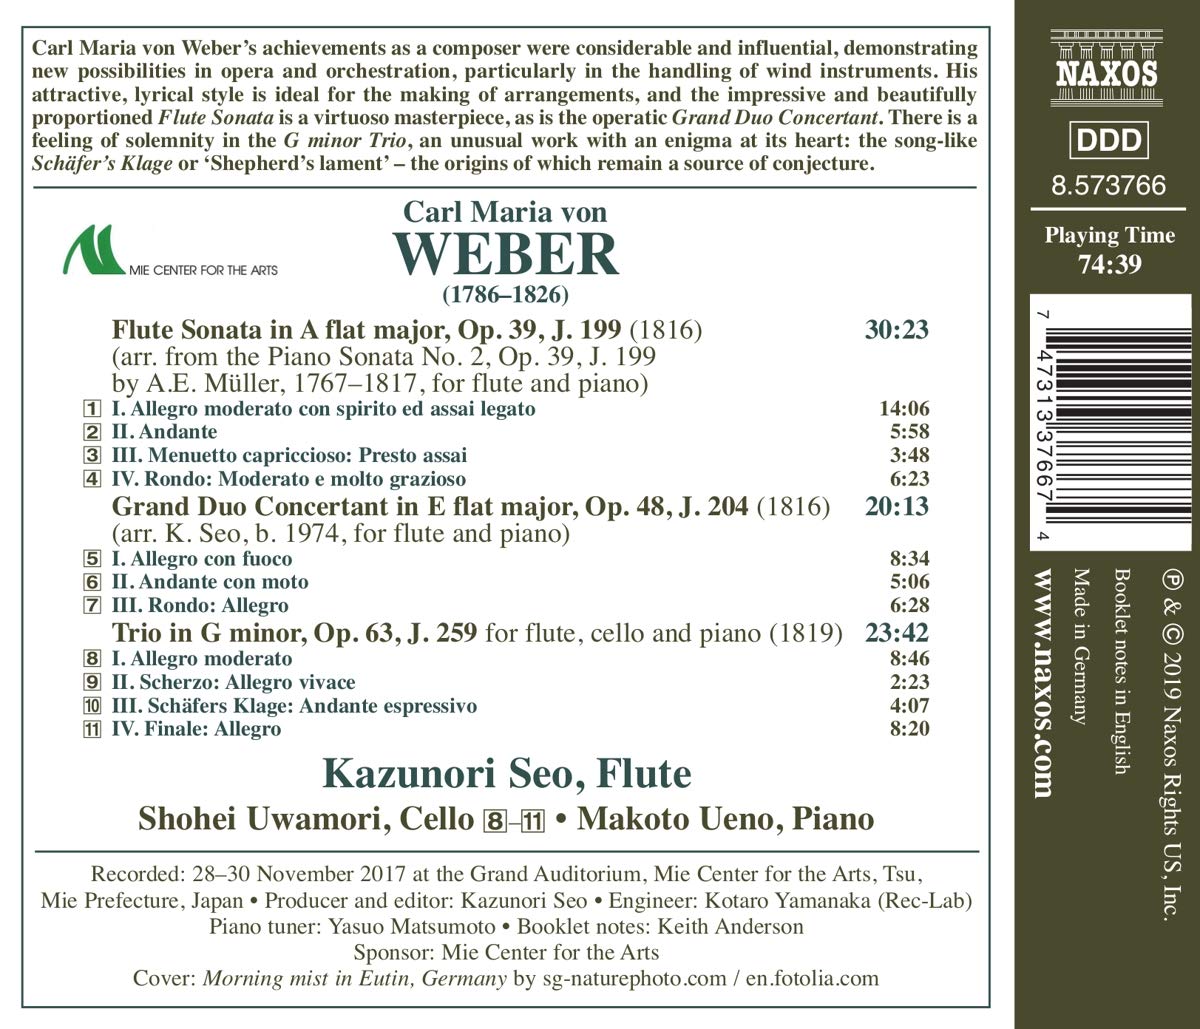 Kazunori Seo 베버: 플루트를 위한 실내악 작품집 (Weber: Chamber Music for Flute)